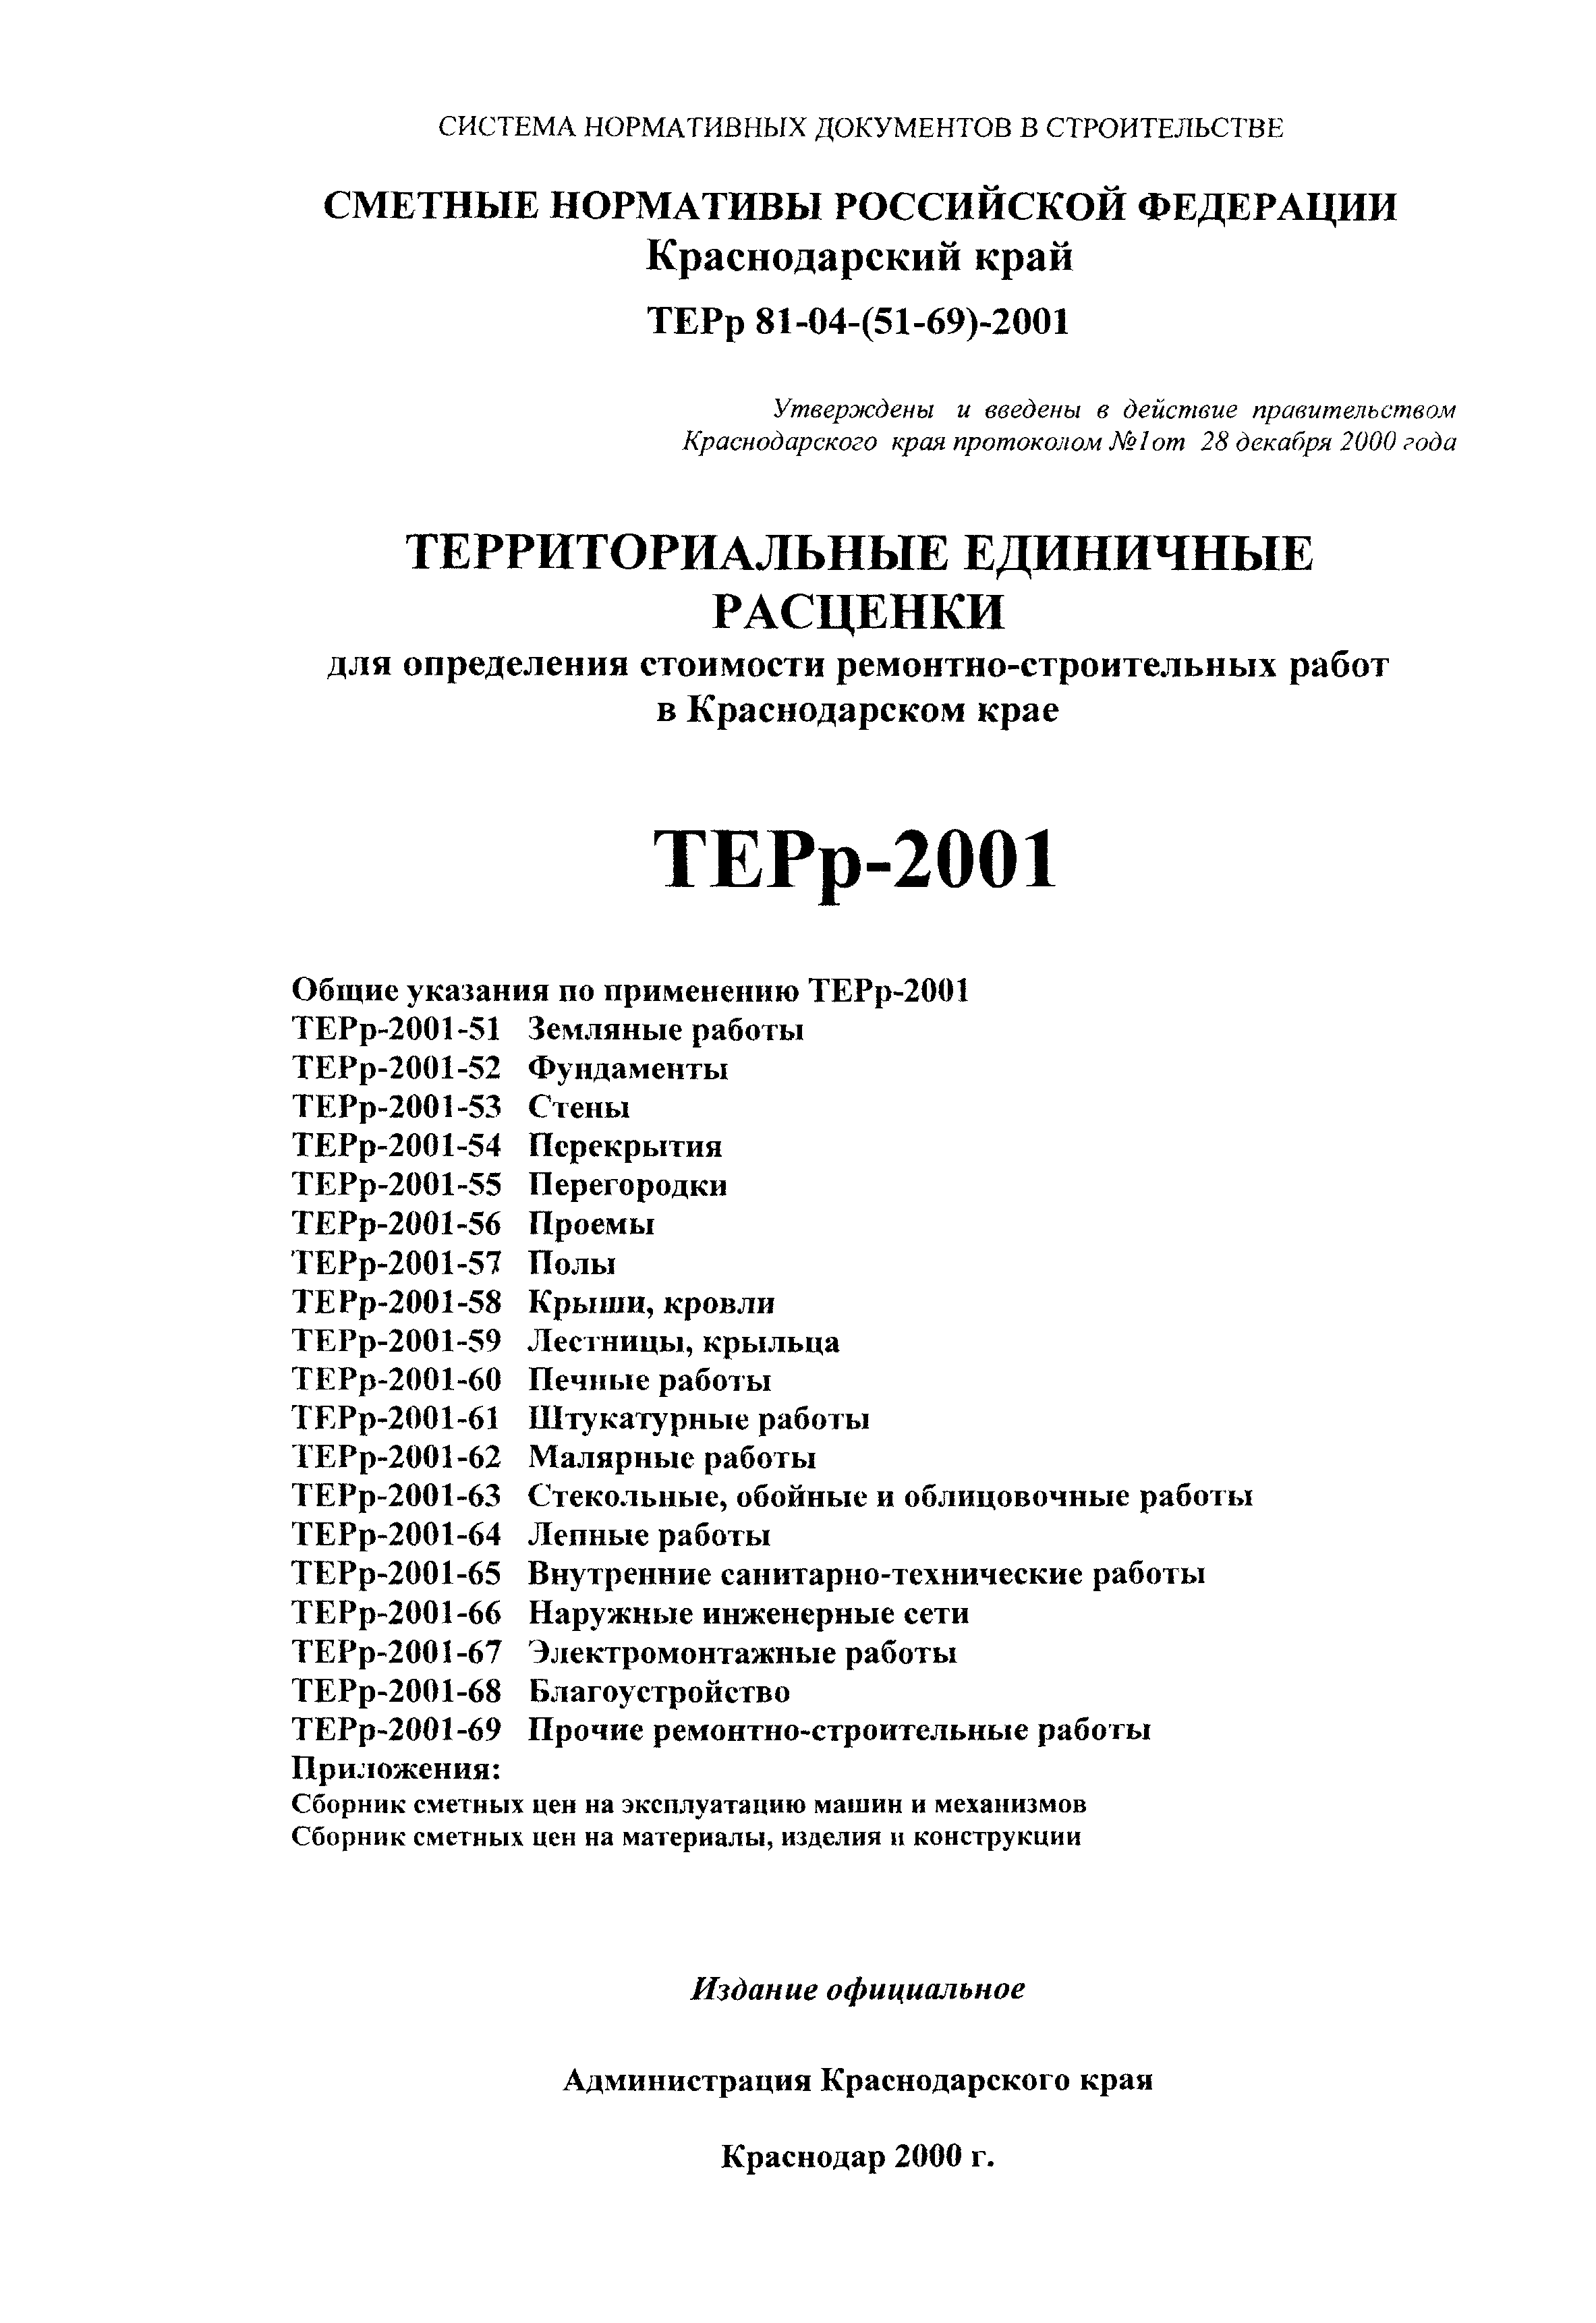 ТЕРр Краснодарский край 2001-66